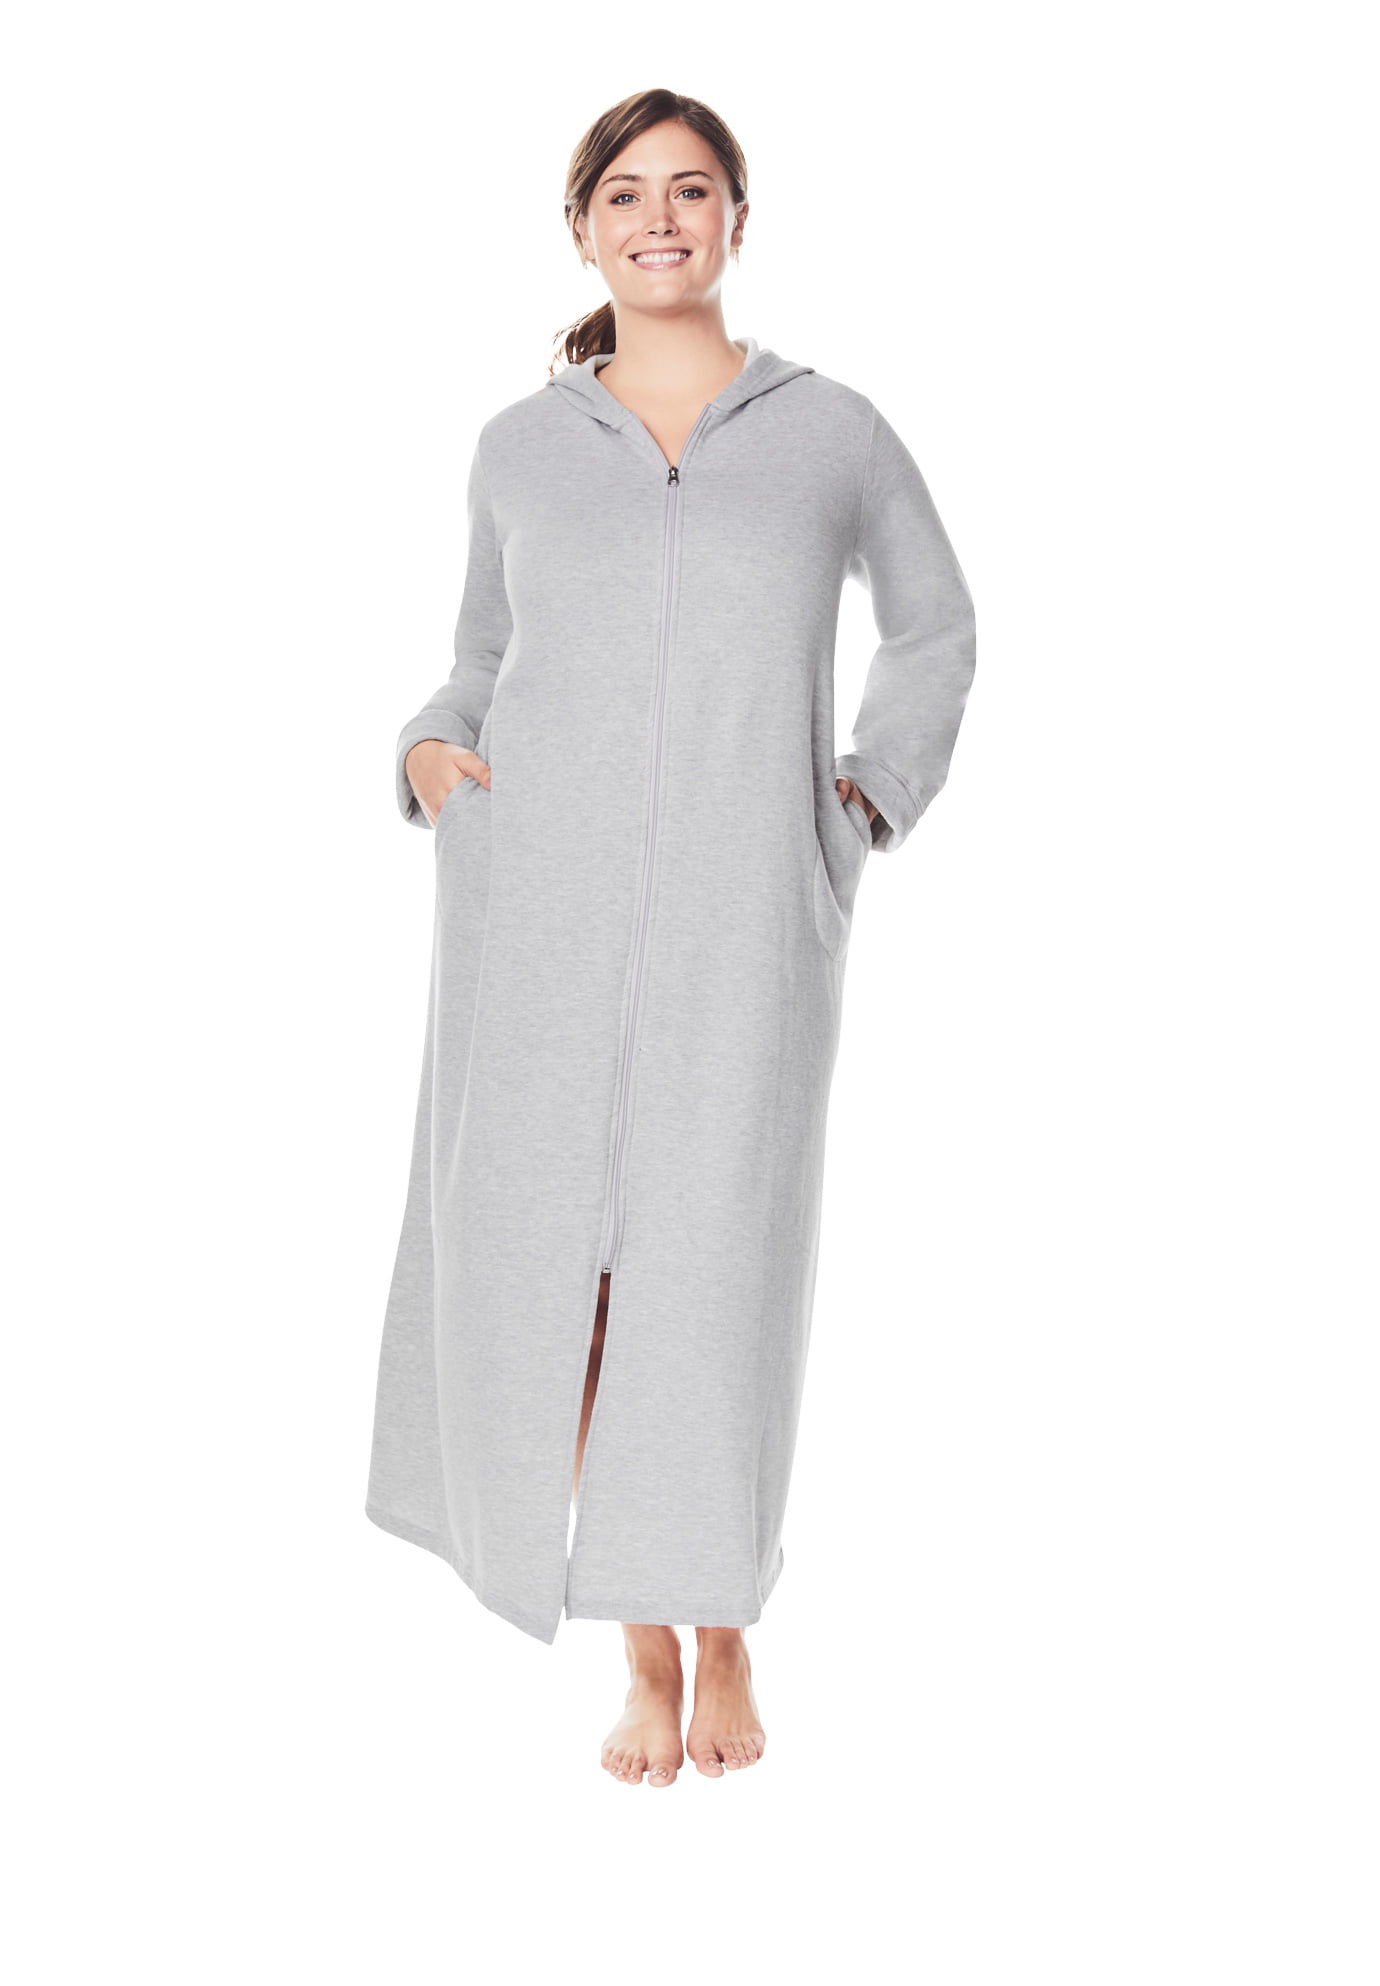 Ladies Soft Snuggle Fleece Hooded Dressing Gown Robe Nightwear Warm Plus Size 